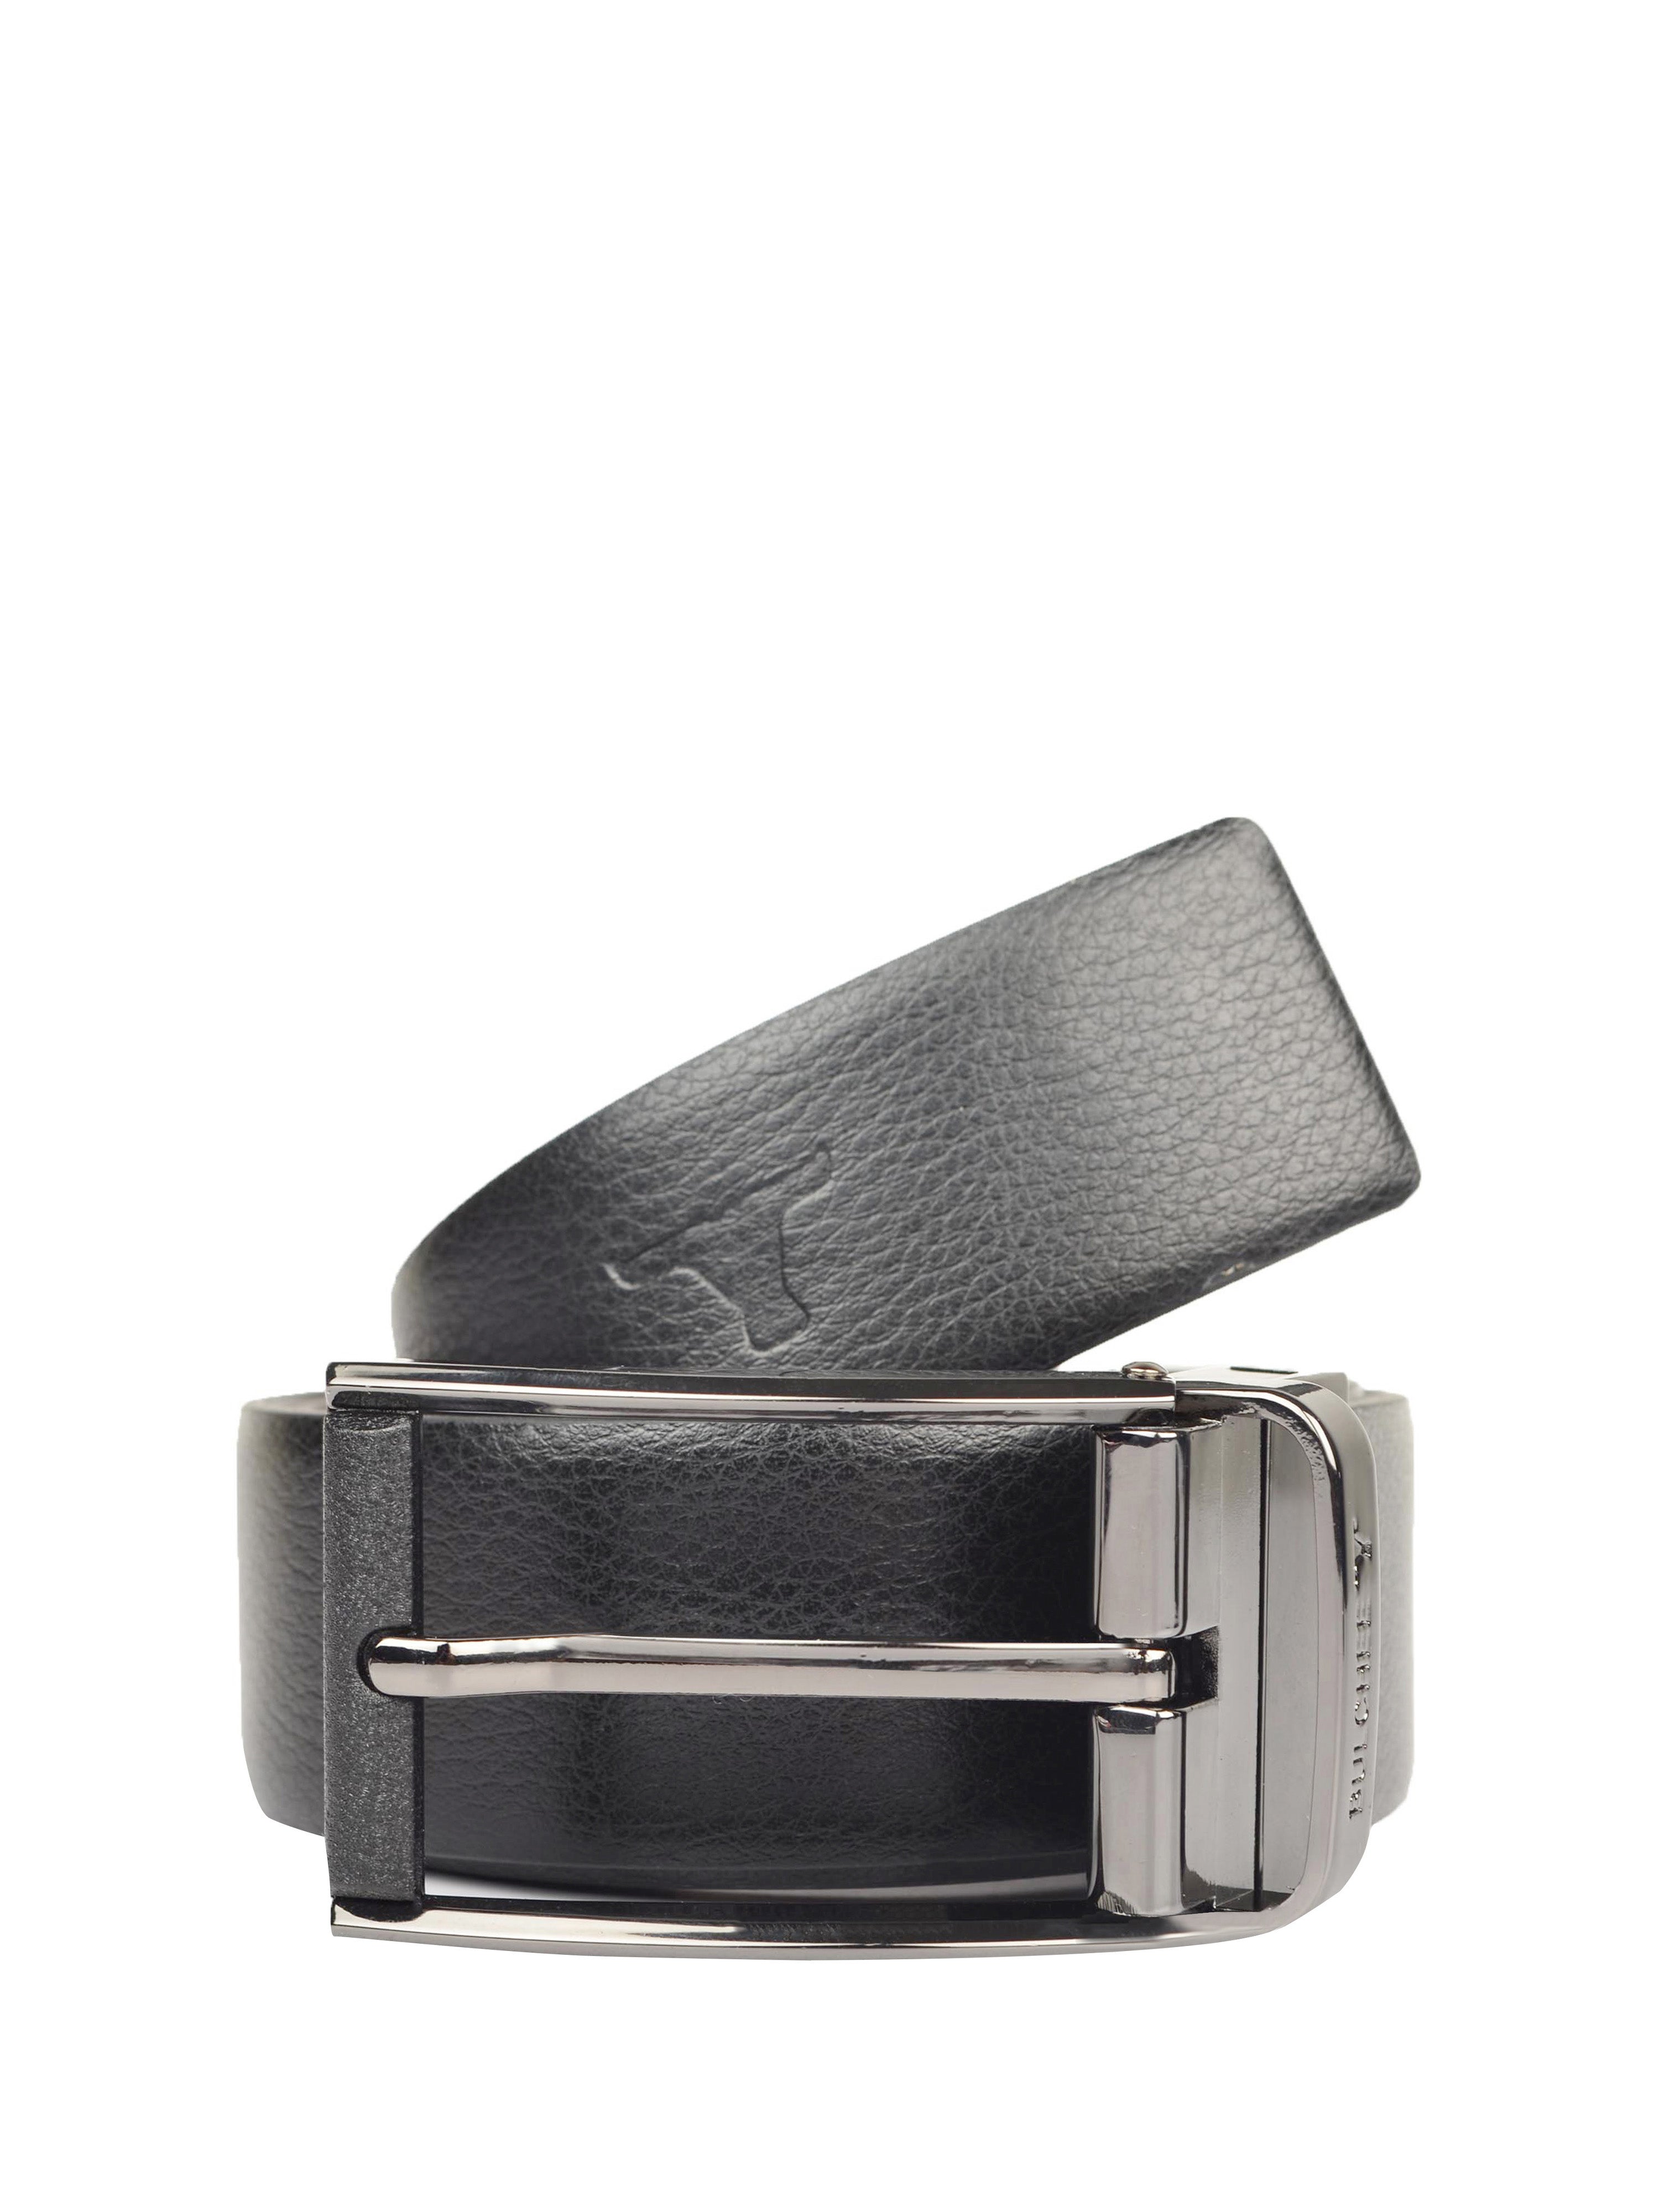 Bulchee Exclusive Collection Men's Genuine Leather Belt | Reversible Prong | Black